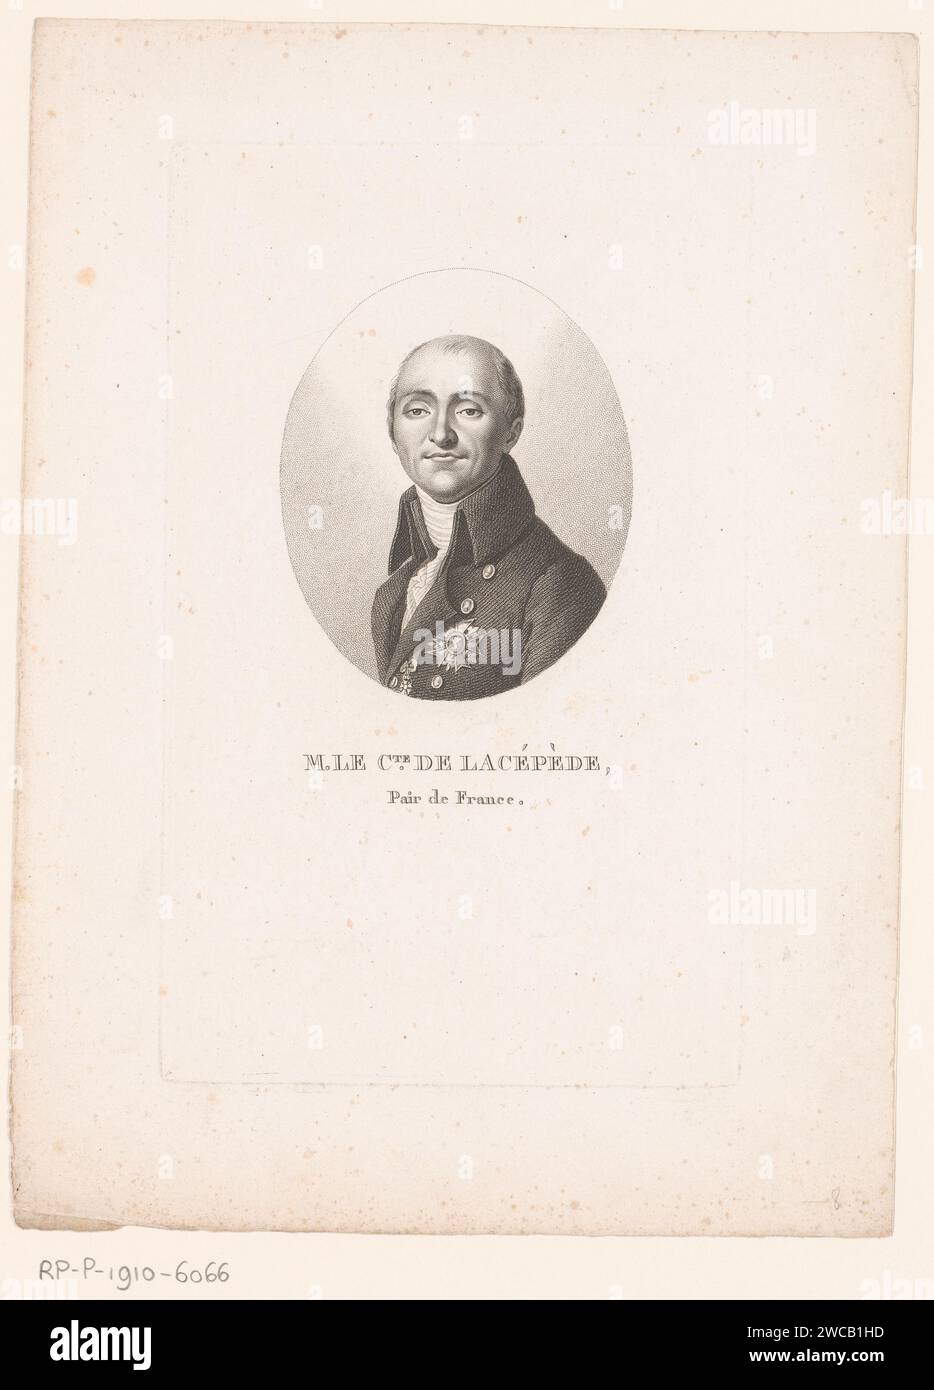 Portret van Bernard Germain de Lacépède, Ambroise Tardieu (ausgezeichnet an), 1820 - 1821 Druck Paris Papier graviert historische Personen. Politiker, z. B. Parteiführer Stockfoto